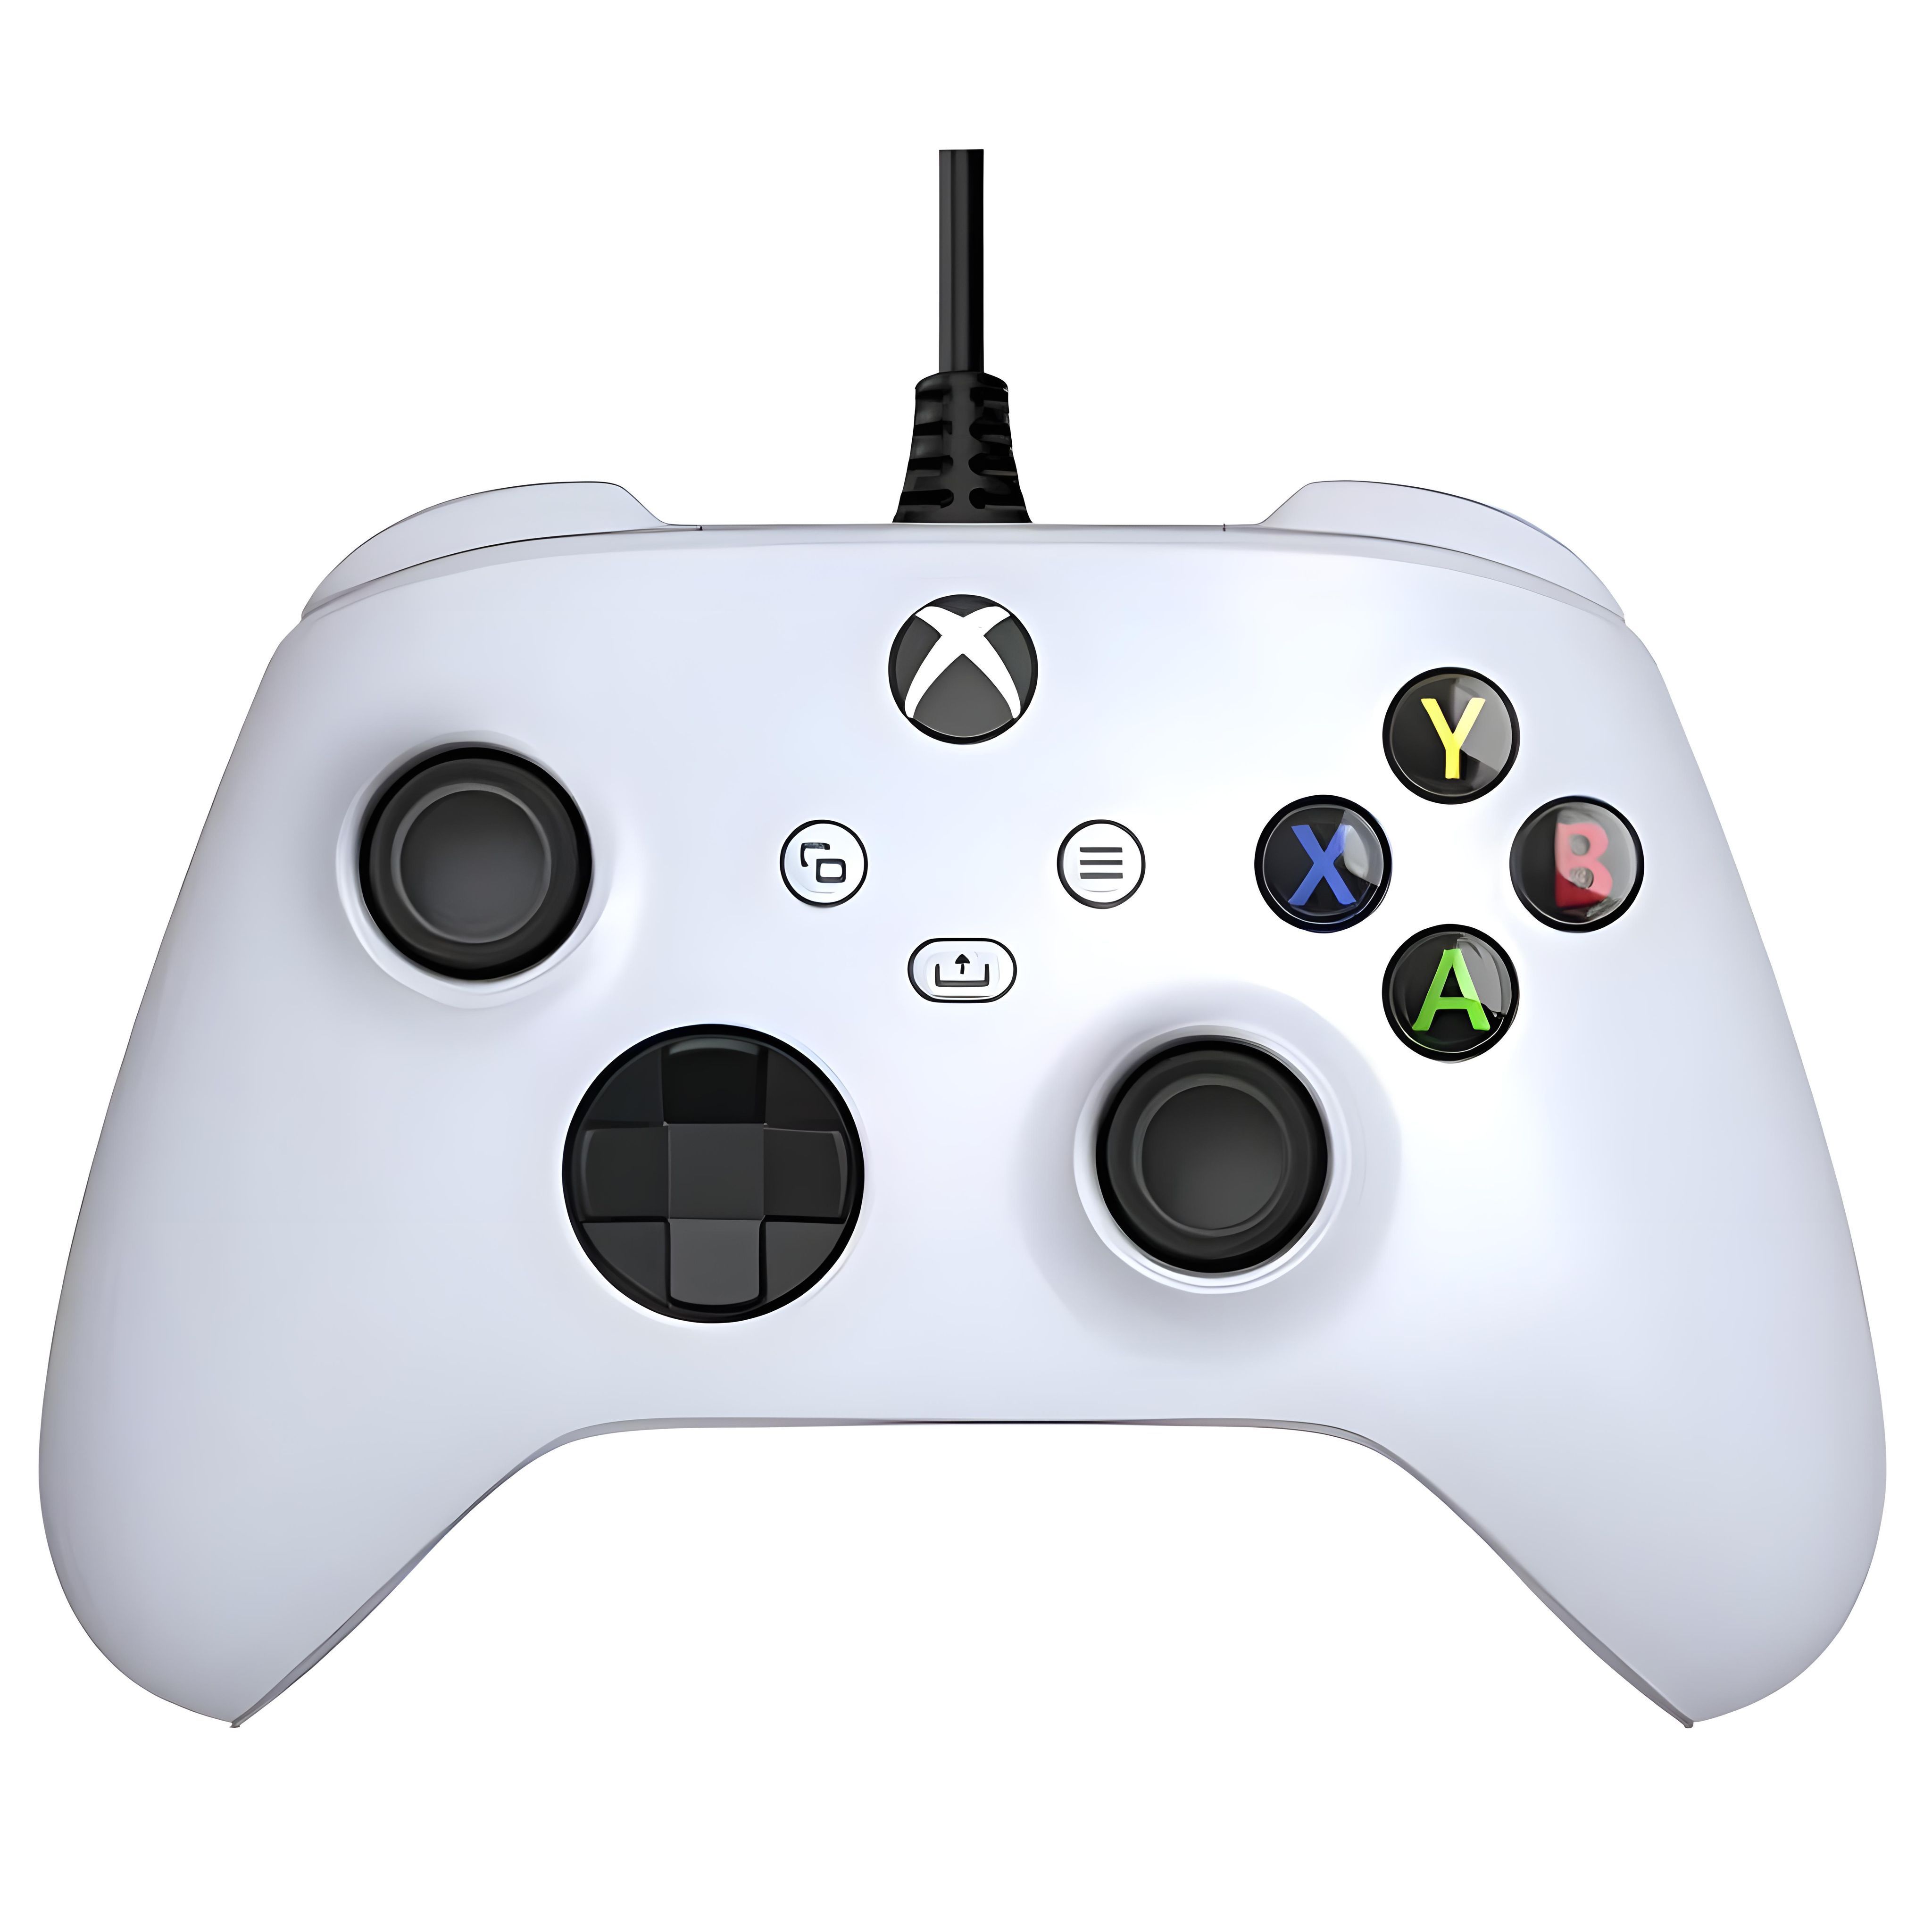 Xbox series x s wireless controller. Xbox one Gamepad. Геймпад Microsoft Xbox Series Robot белый (QAS-00002). Джойстик Xbox one s. Джойстик для хбокс one.